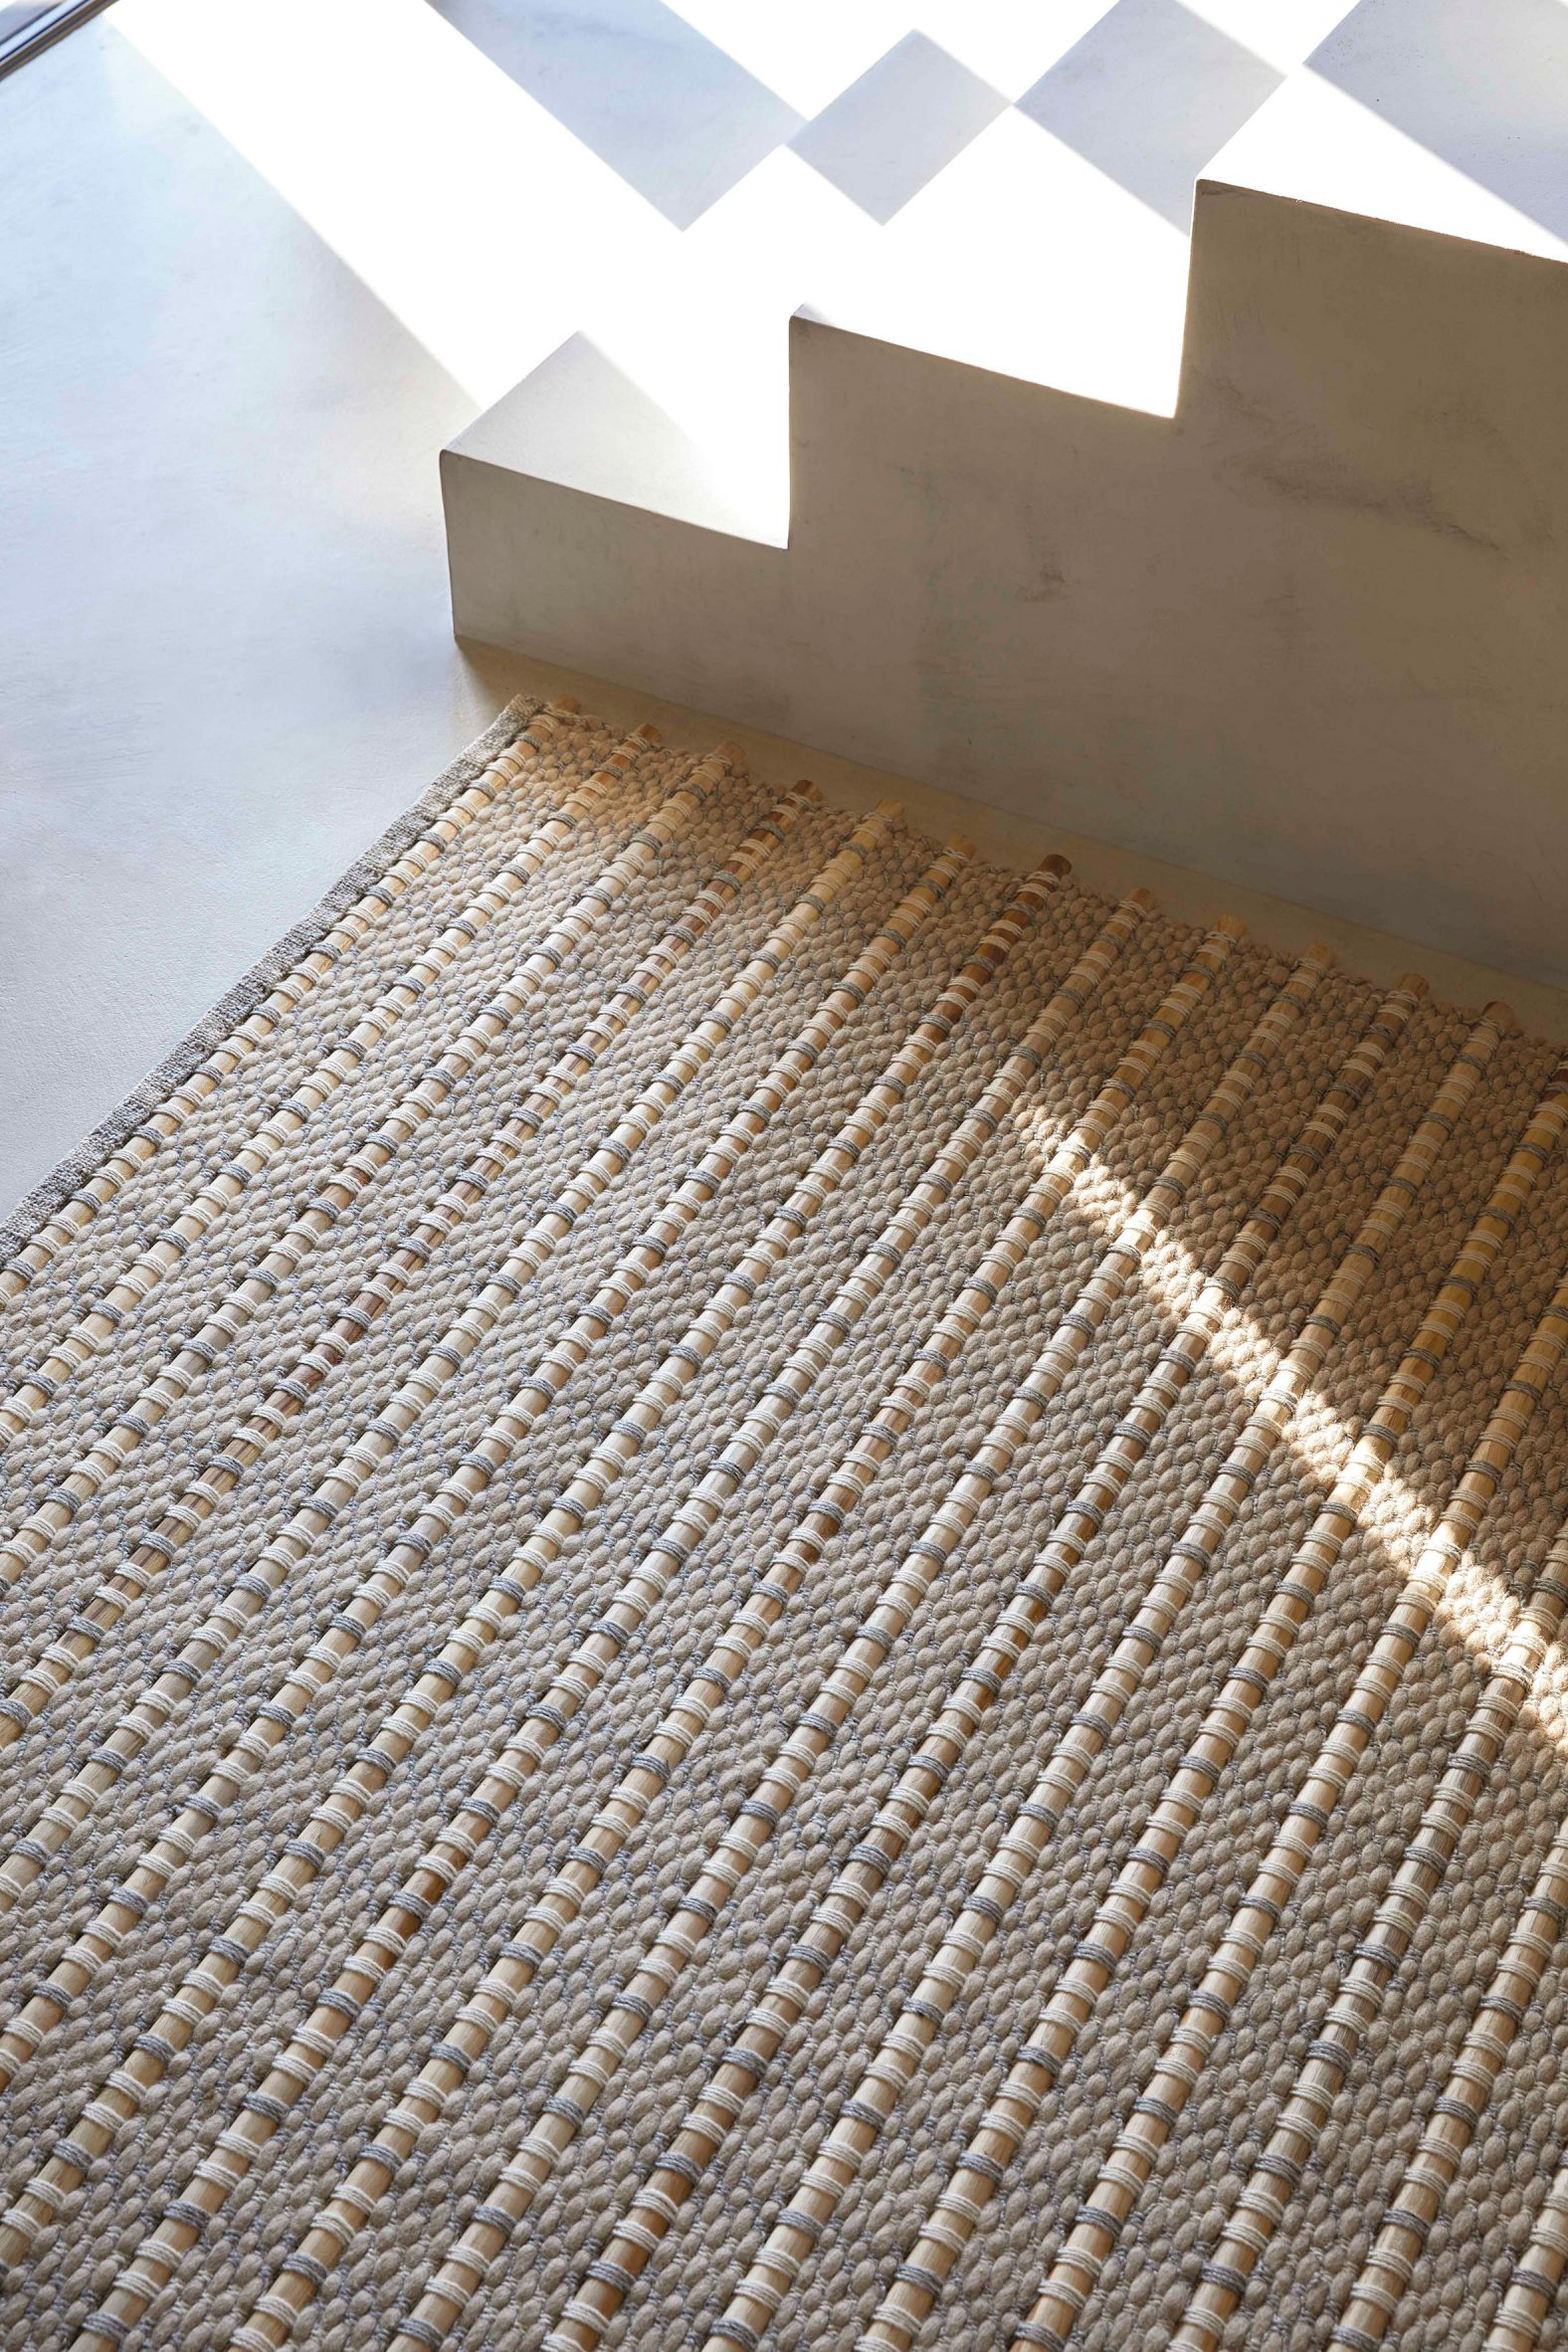 GOZ rug collection by Kengo Kuma for Gan